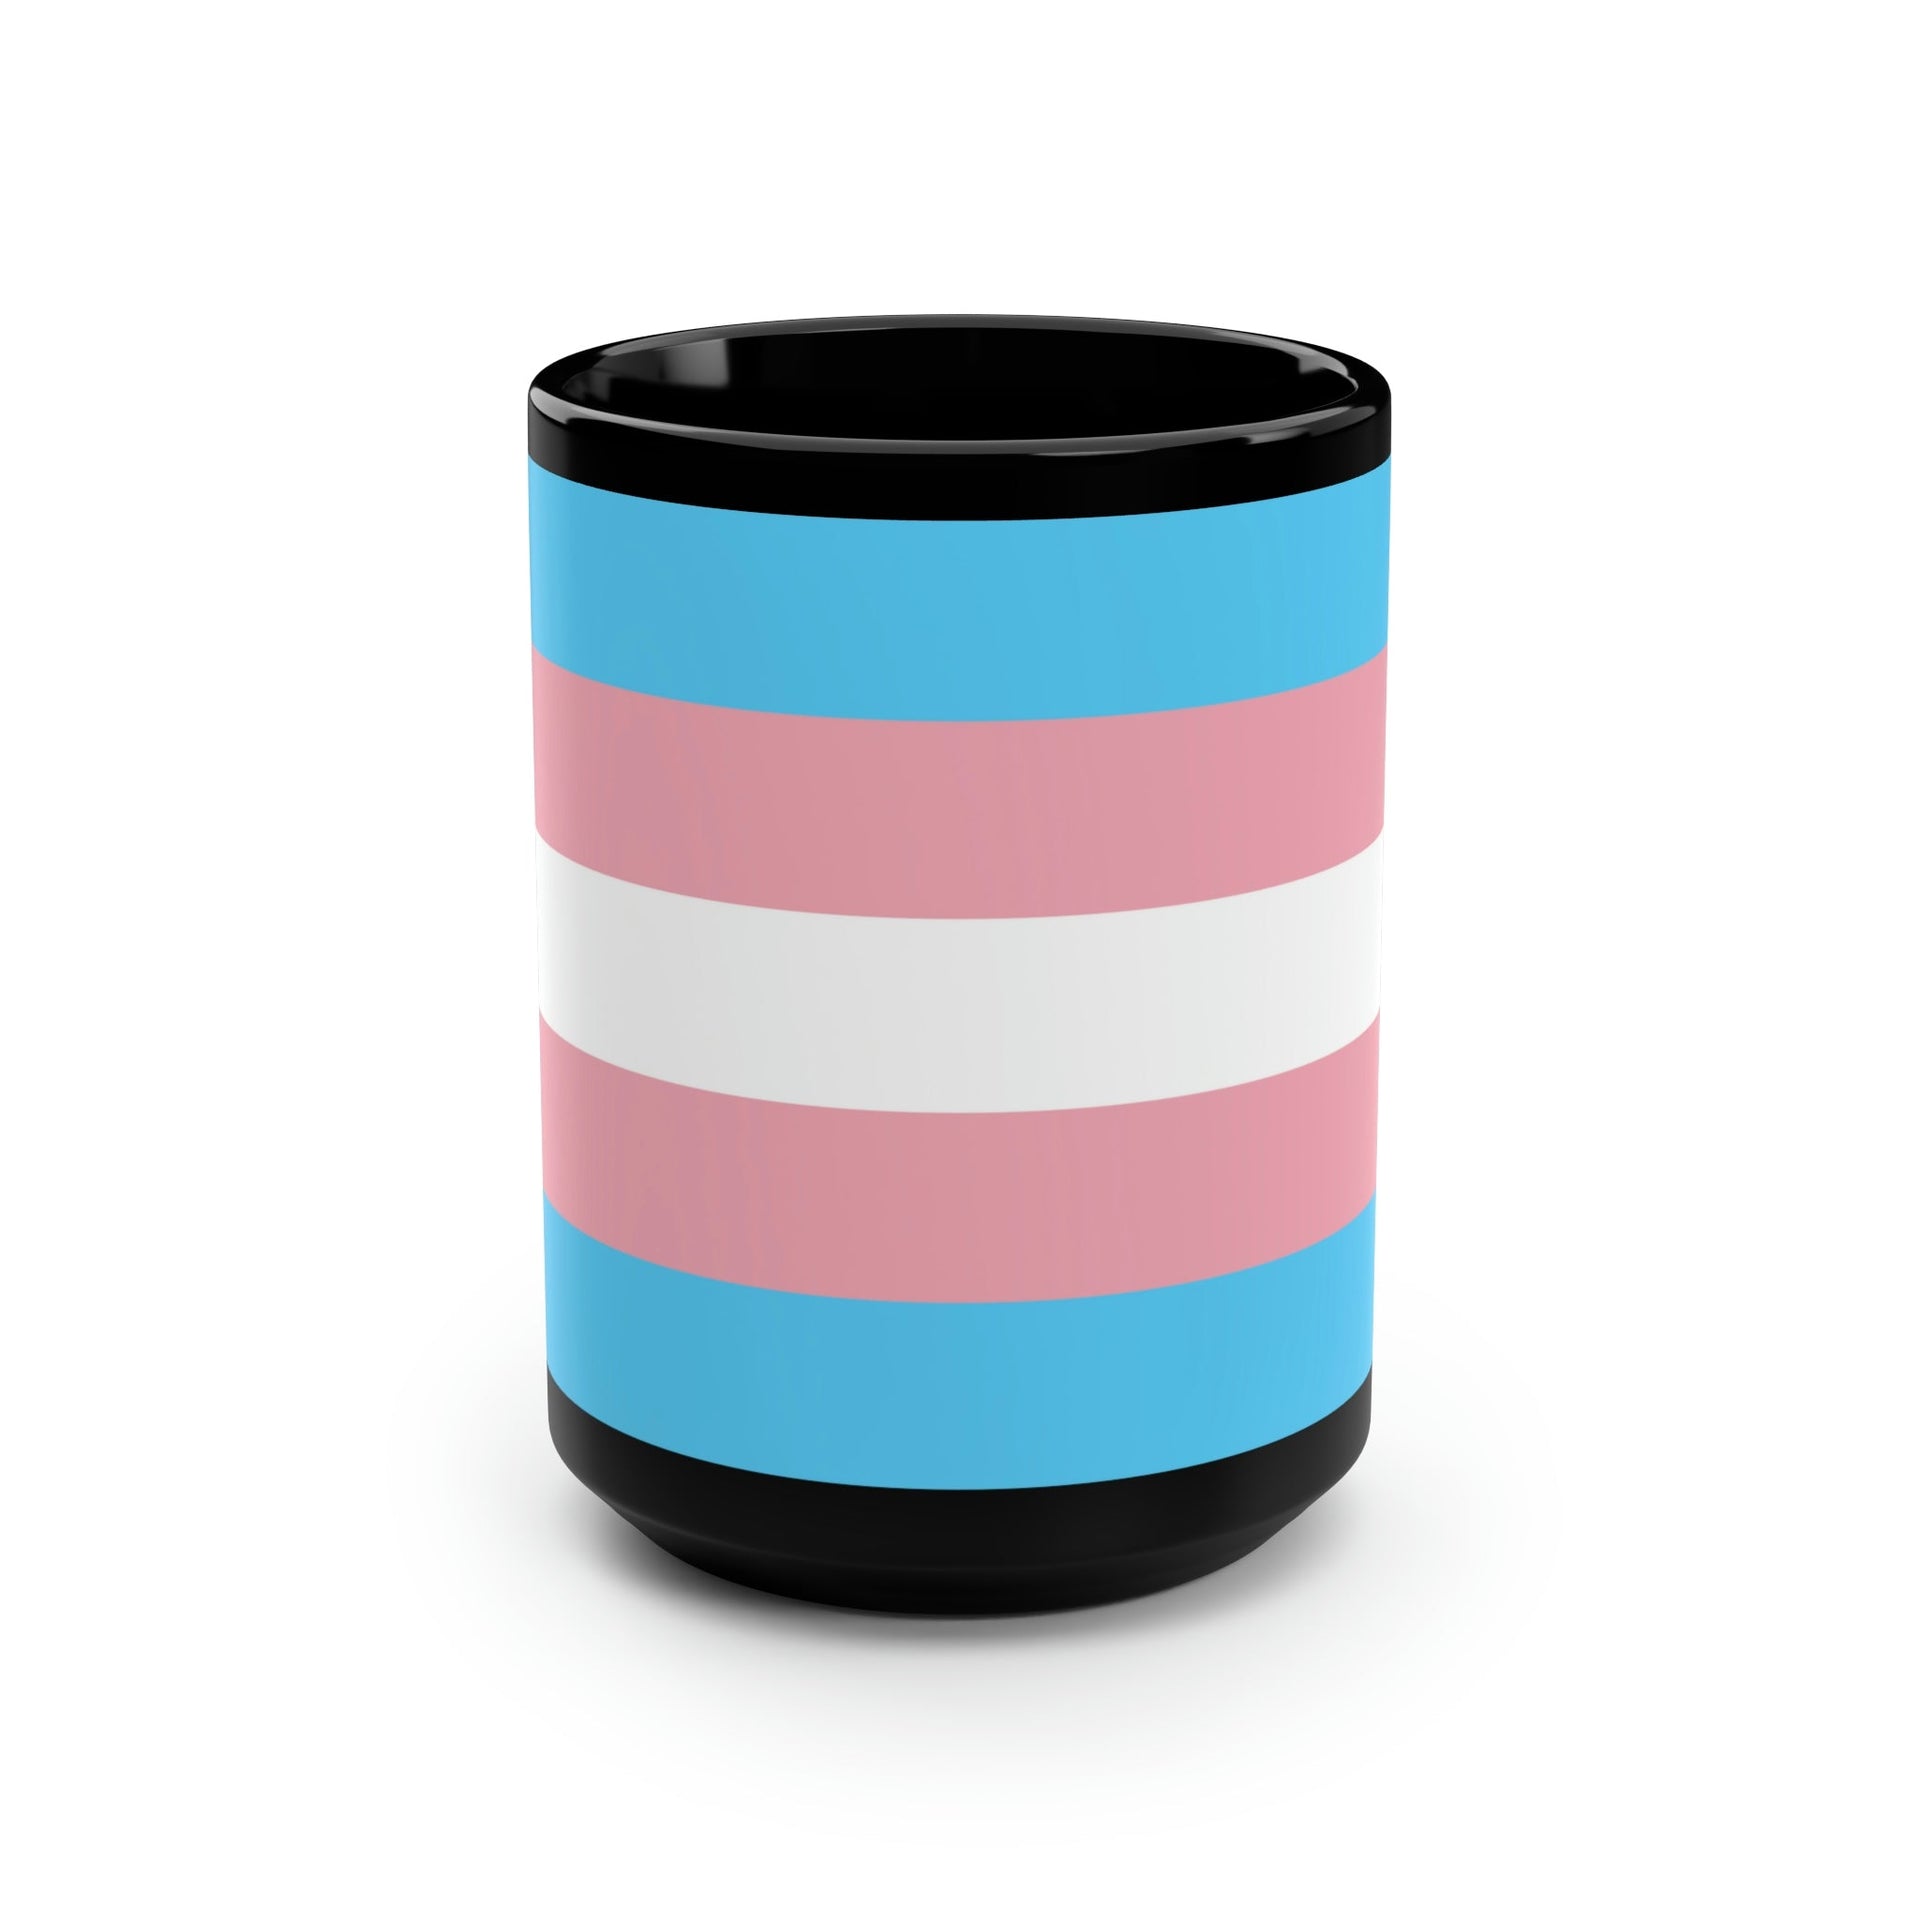 Trans Pride Mug Akron Pride Custom Tees